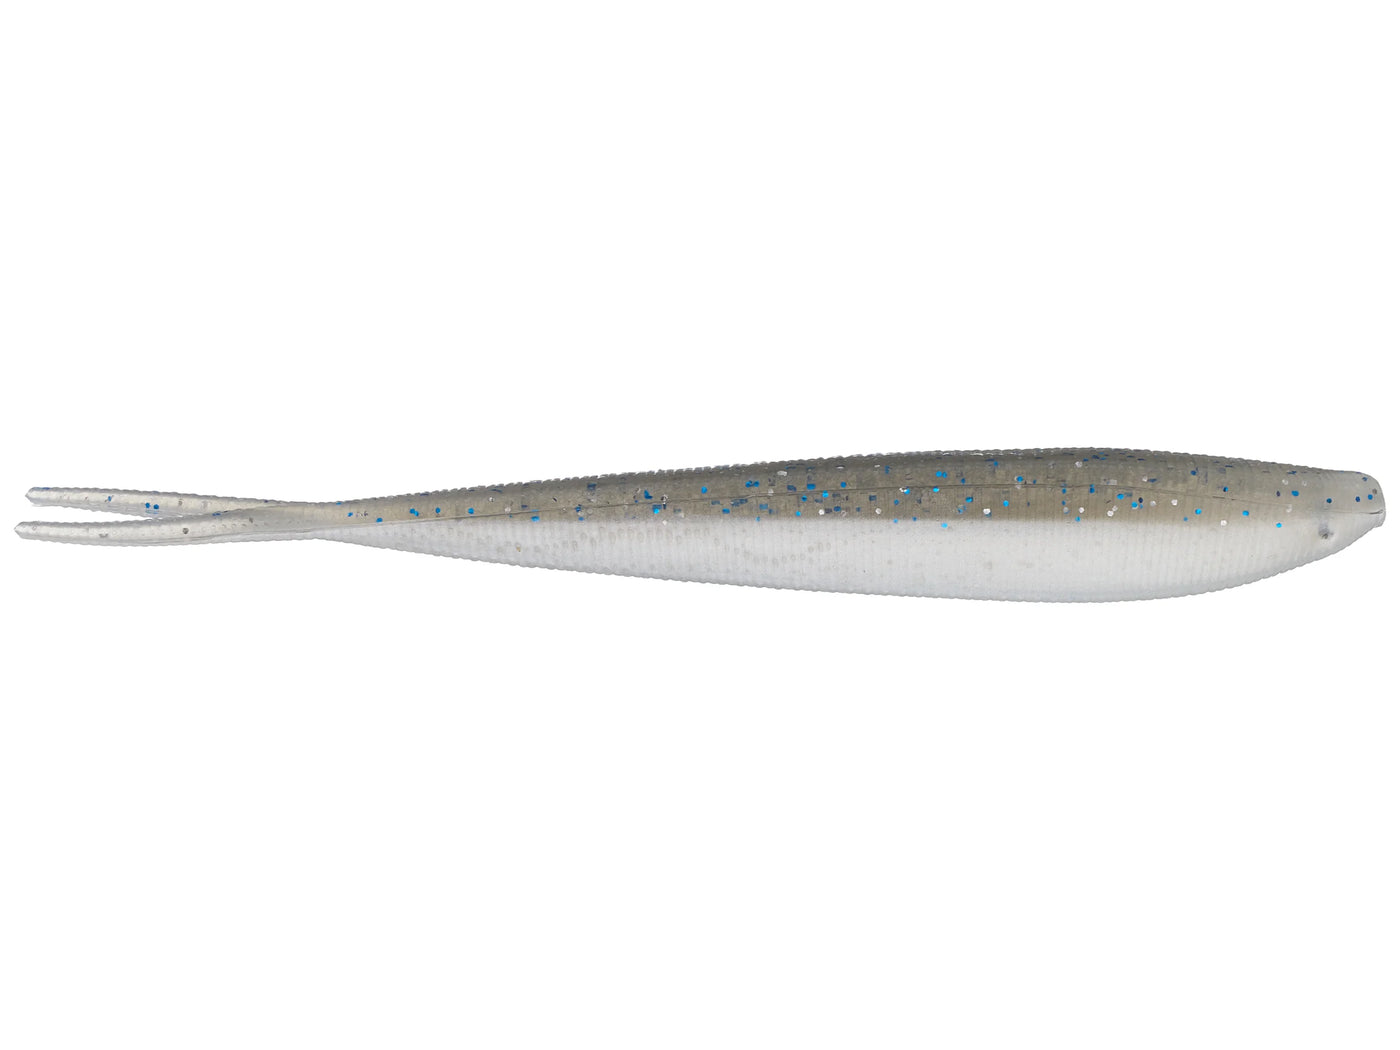 Pulse Fish Lures Plastics Soft Jerkbait